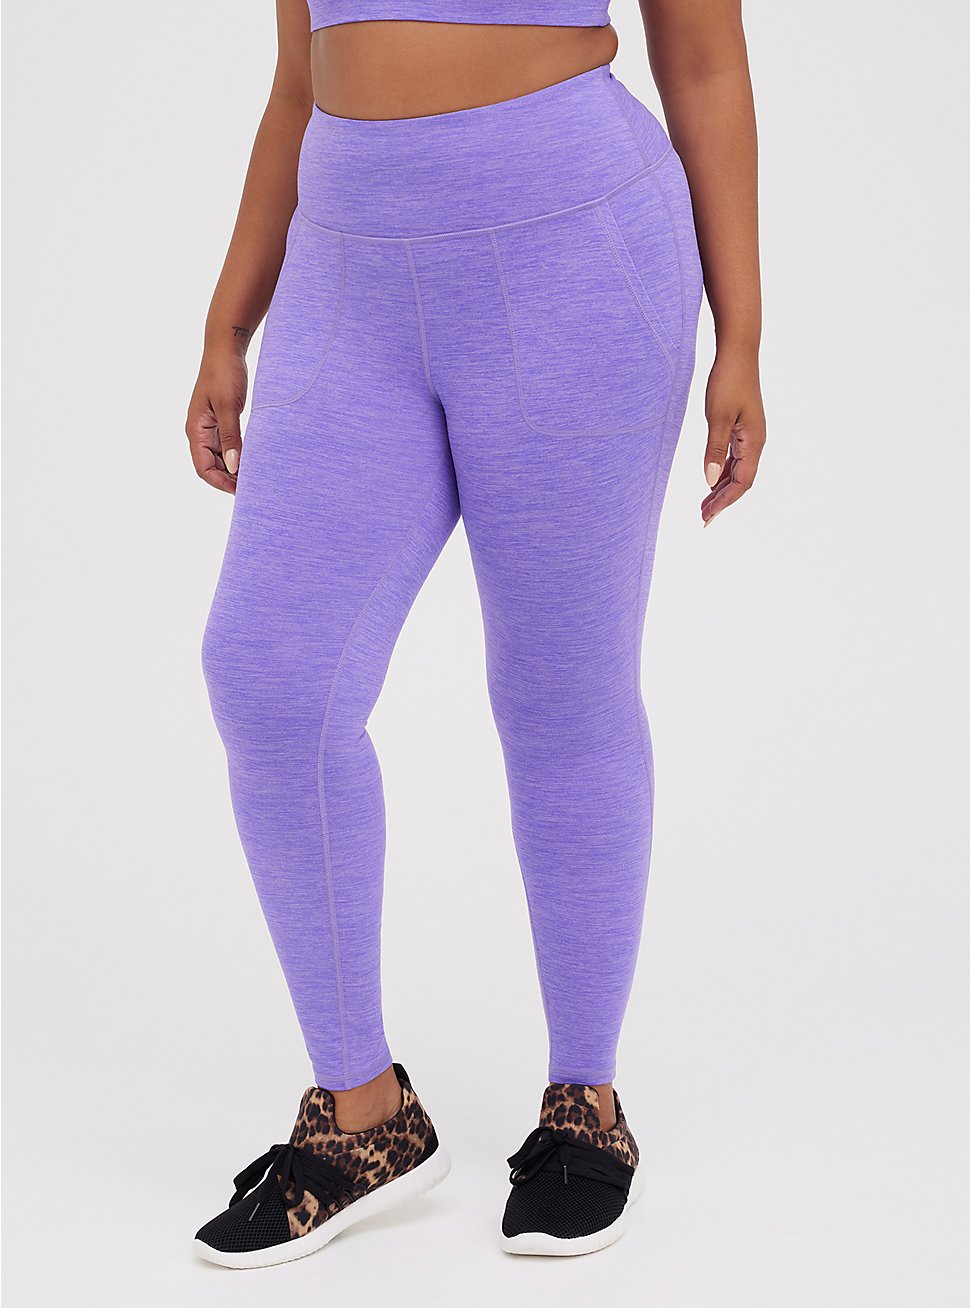 Full Length Legging - Super Soft Performance Jersey Neon Lavender, LAVENDER, hi-res